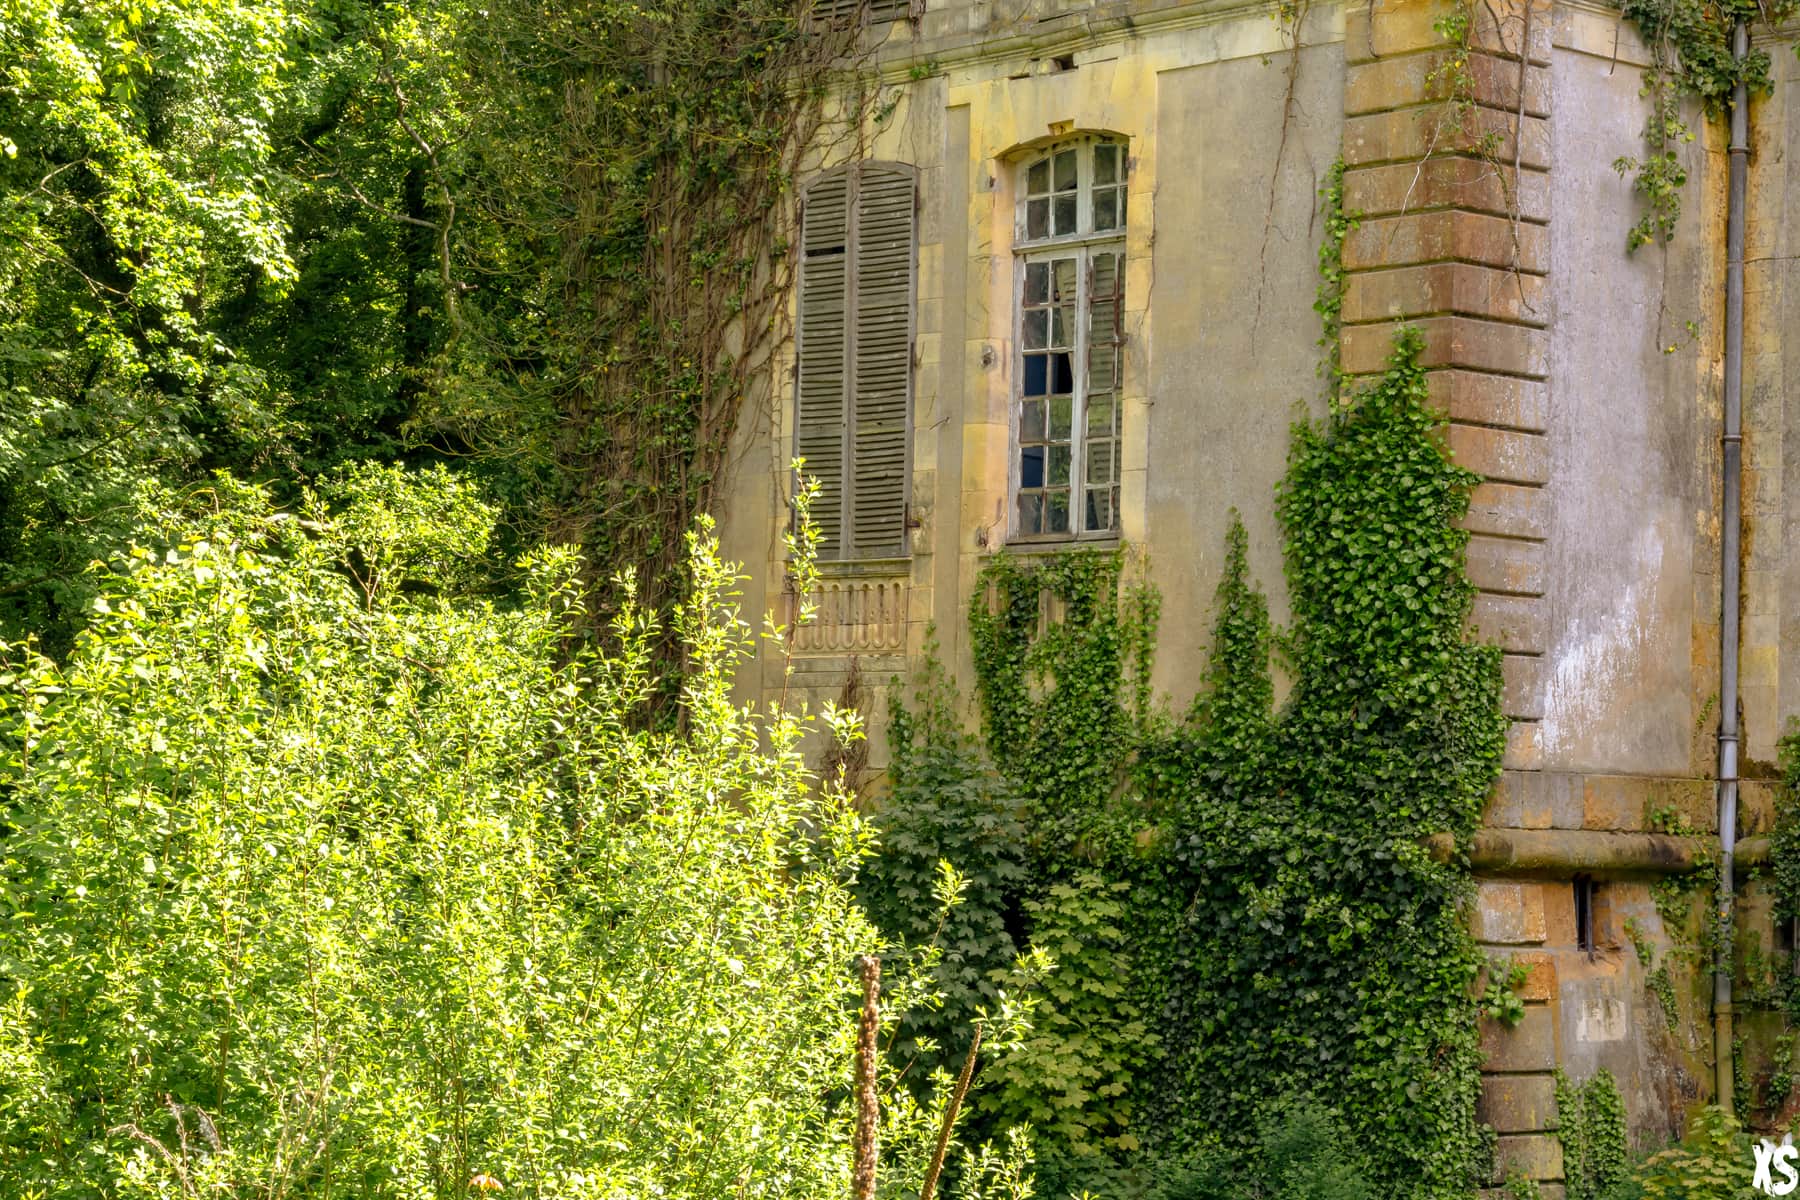 Château abandonné en France | urbexsession.com/chateau-larry-eyler | Urbex France